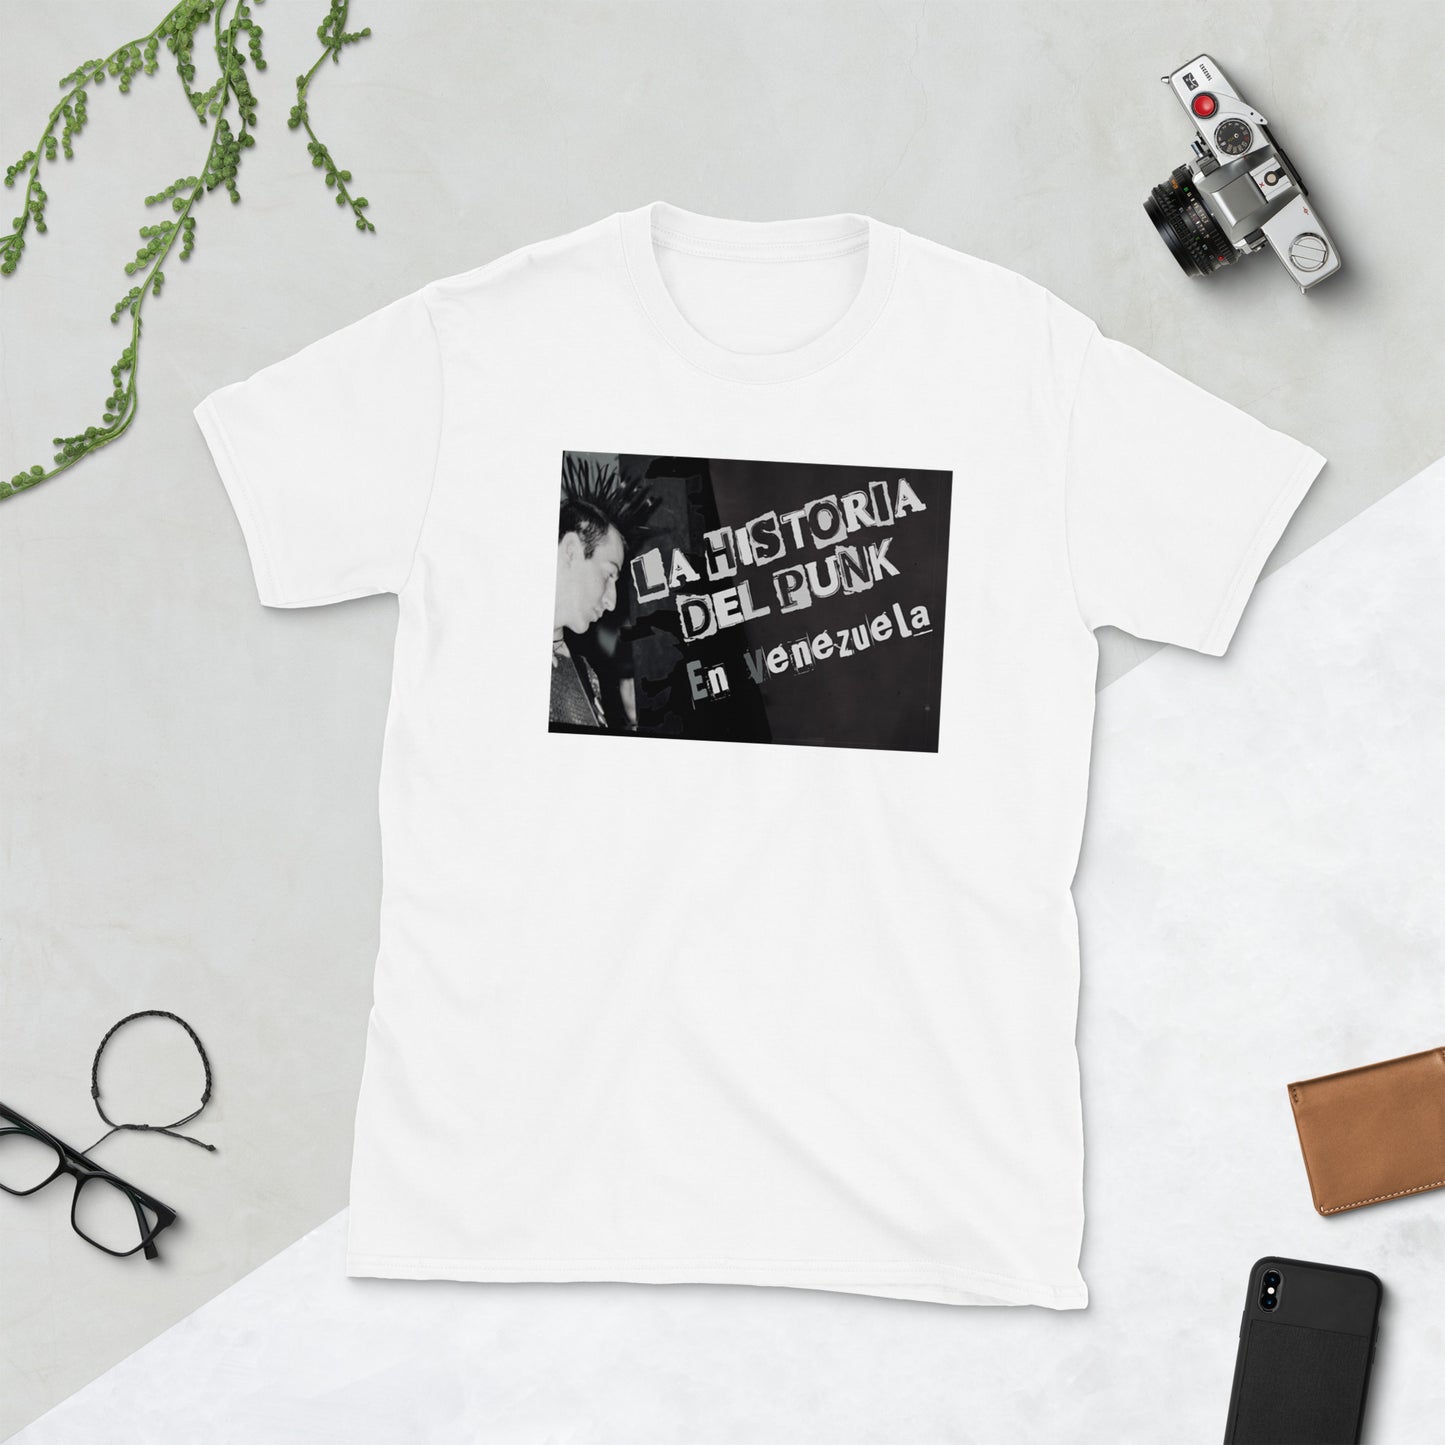 La Historia del Punk en Venezuela T-Shirt White